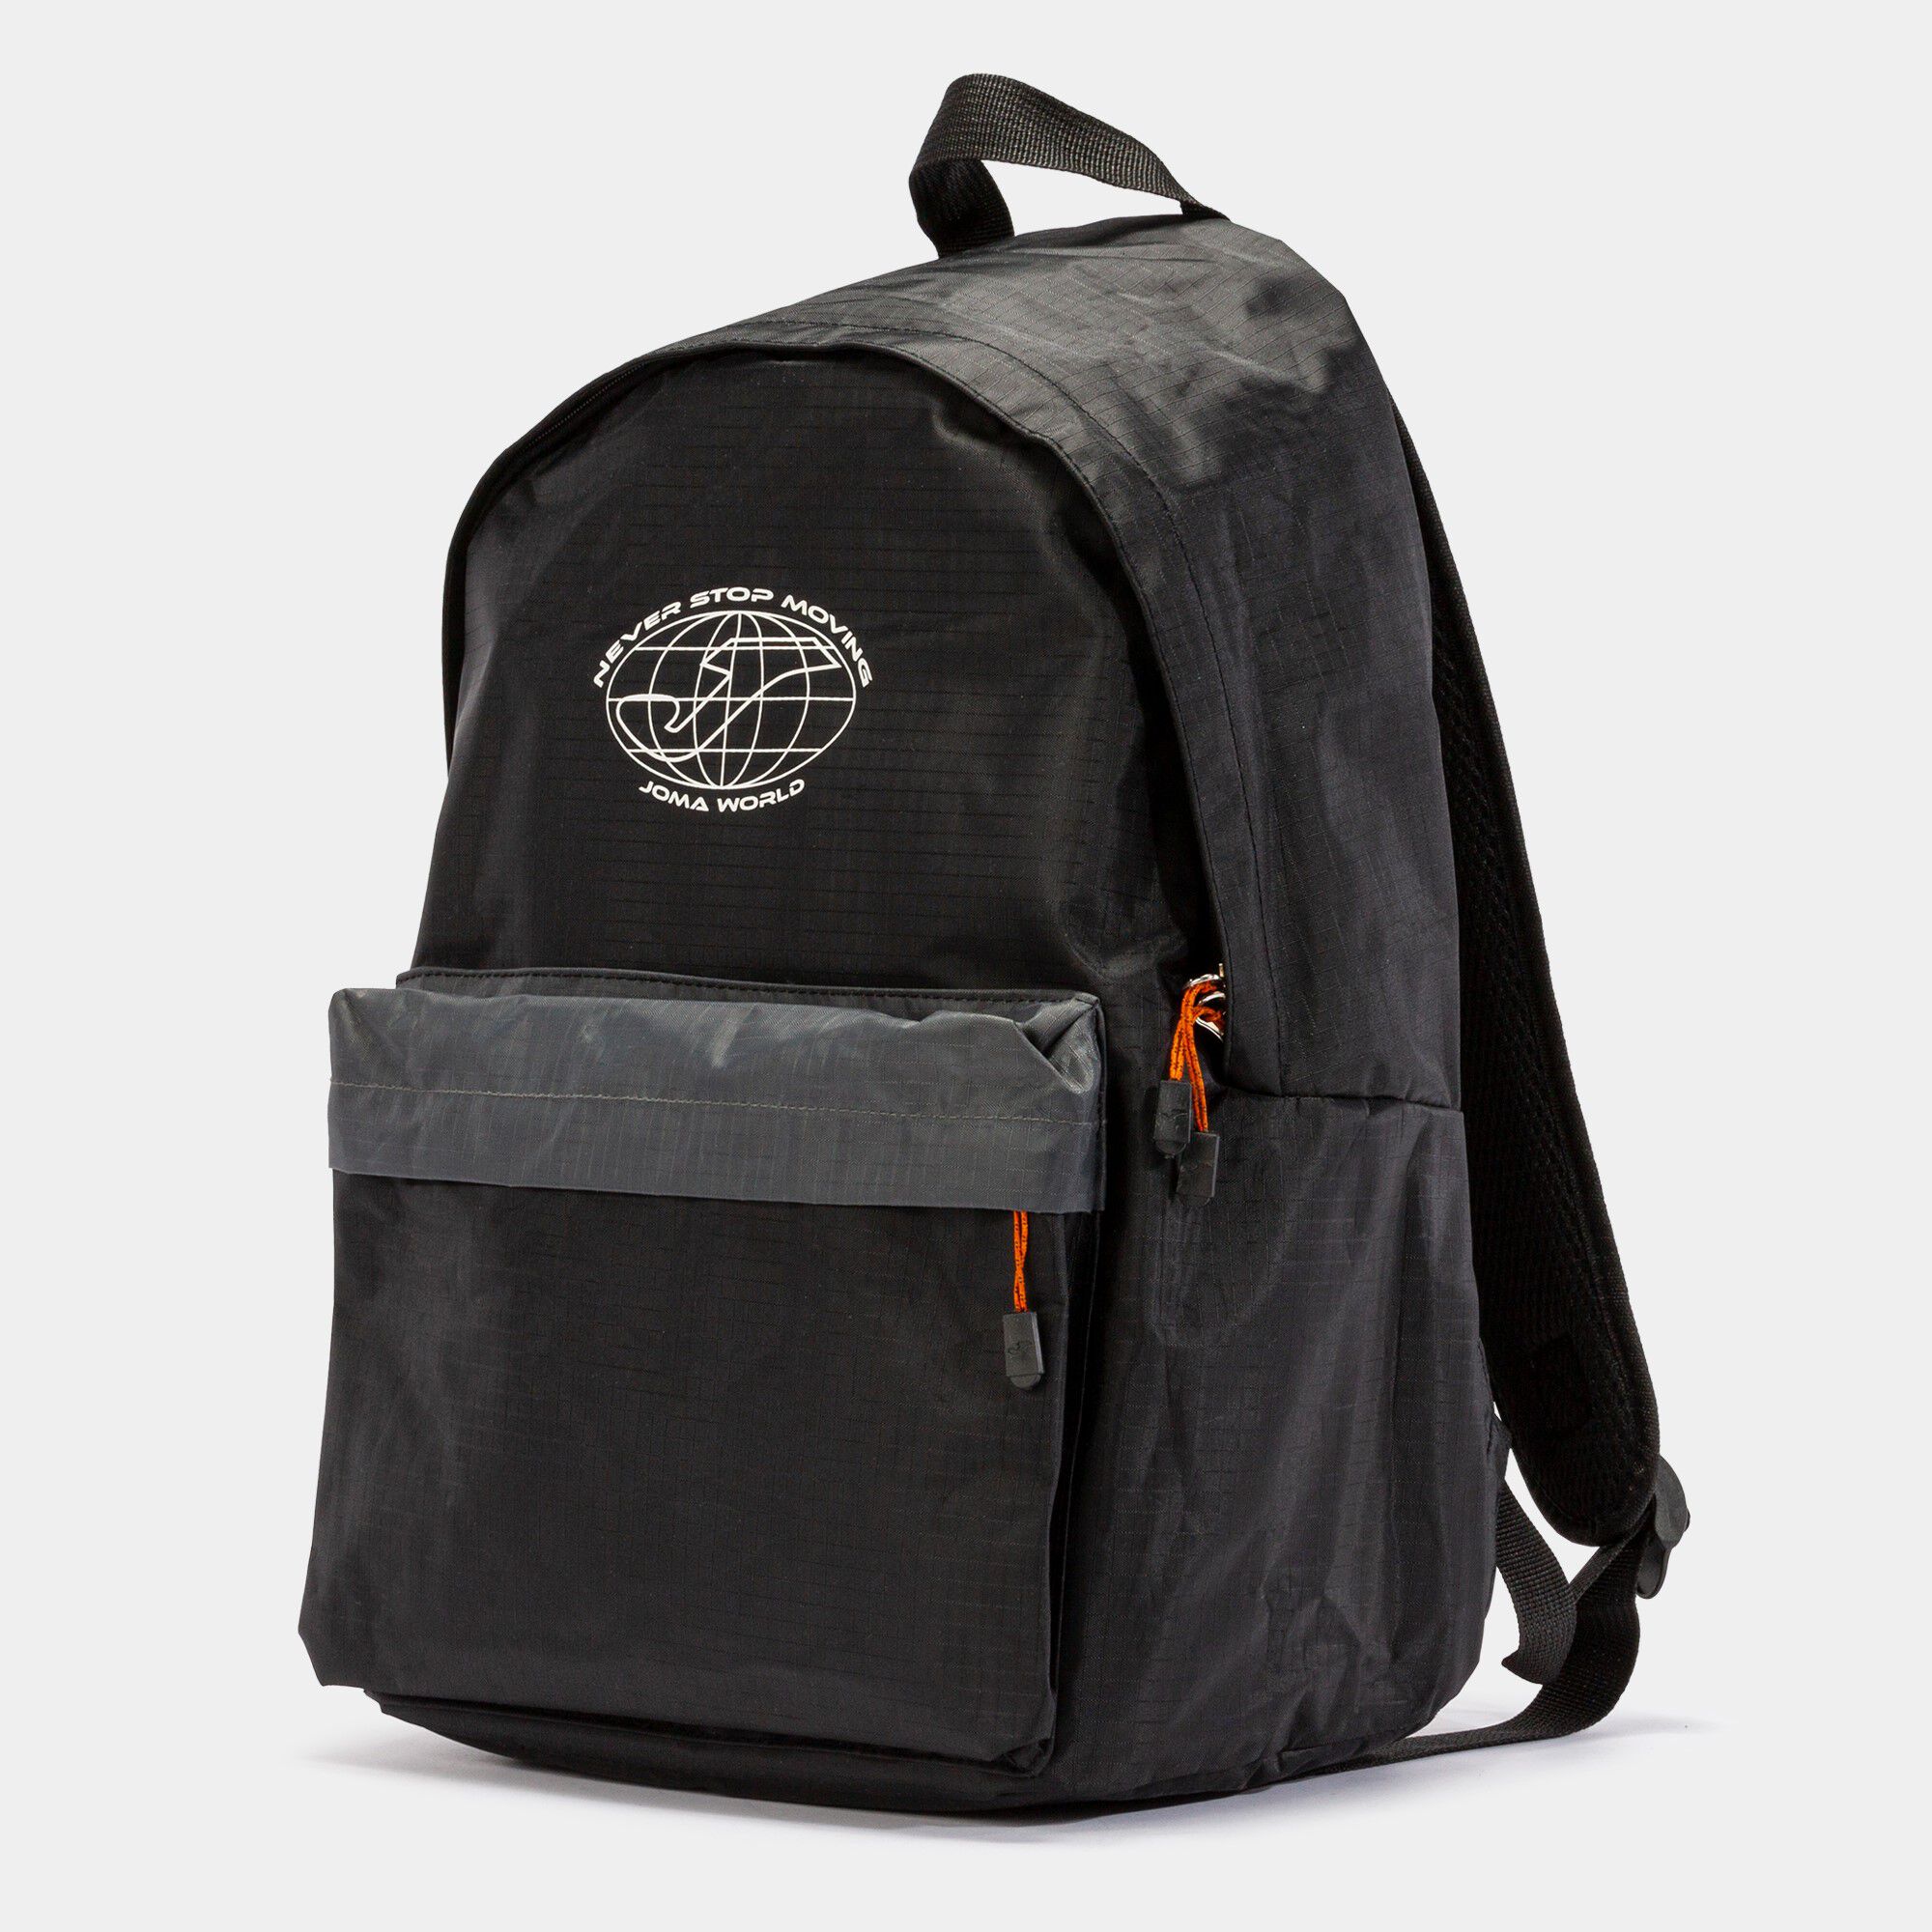 Backpack - shoe bag Moving Joma World black